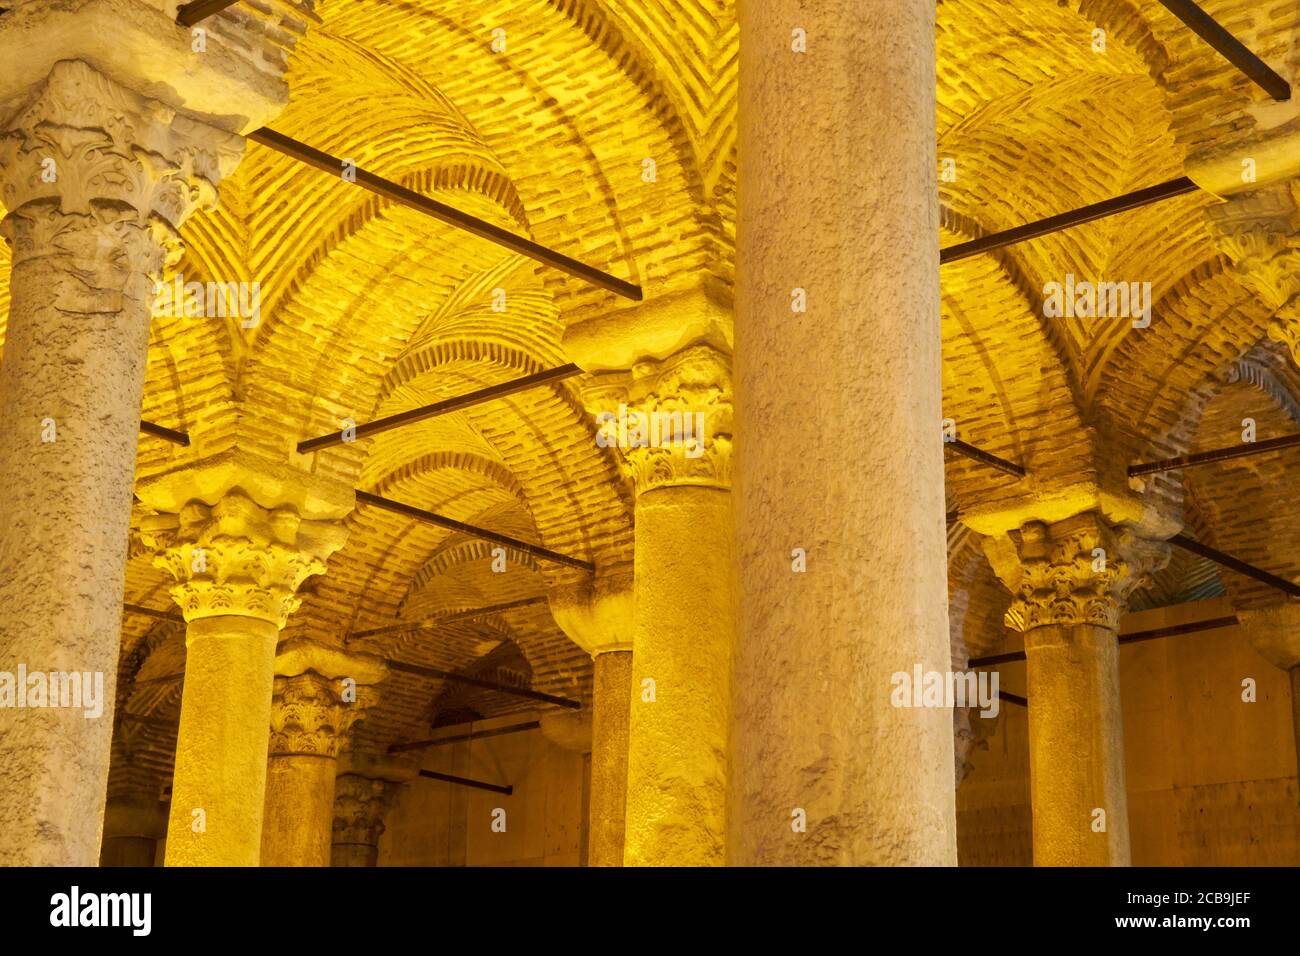 Interior of the Basilica Cistern, or Sunken Cistern. Sultanahmet. Istanbul. Turkey. Stock Photo